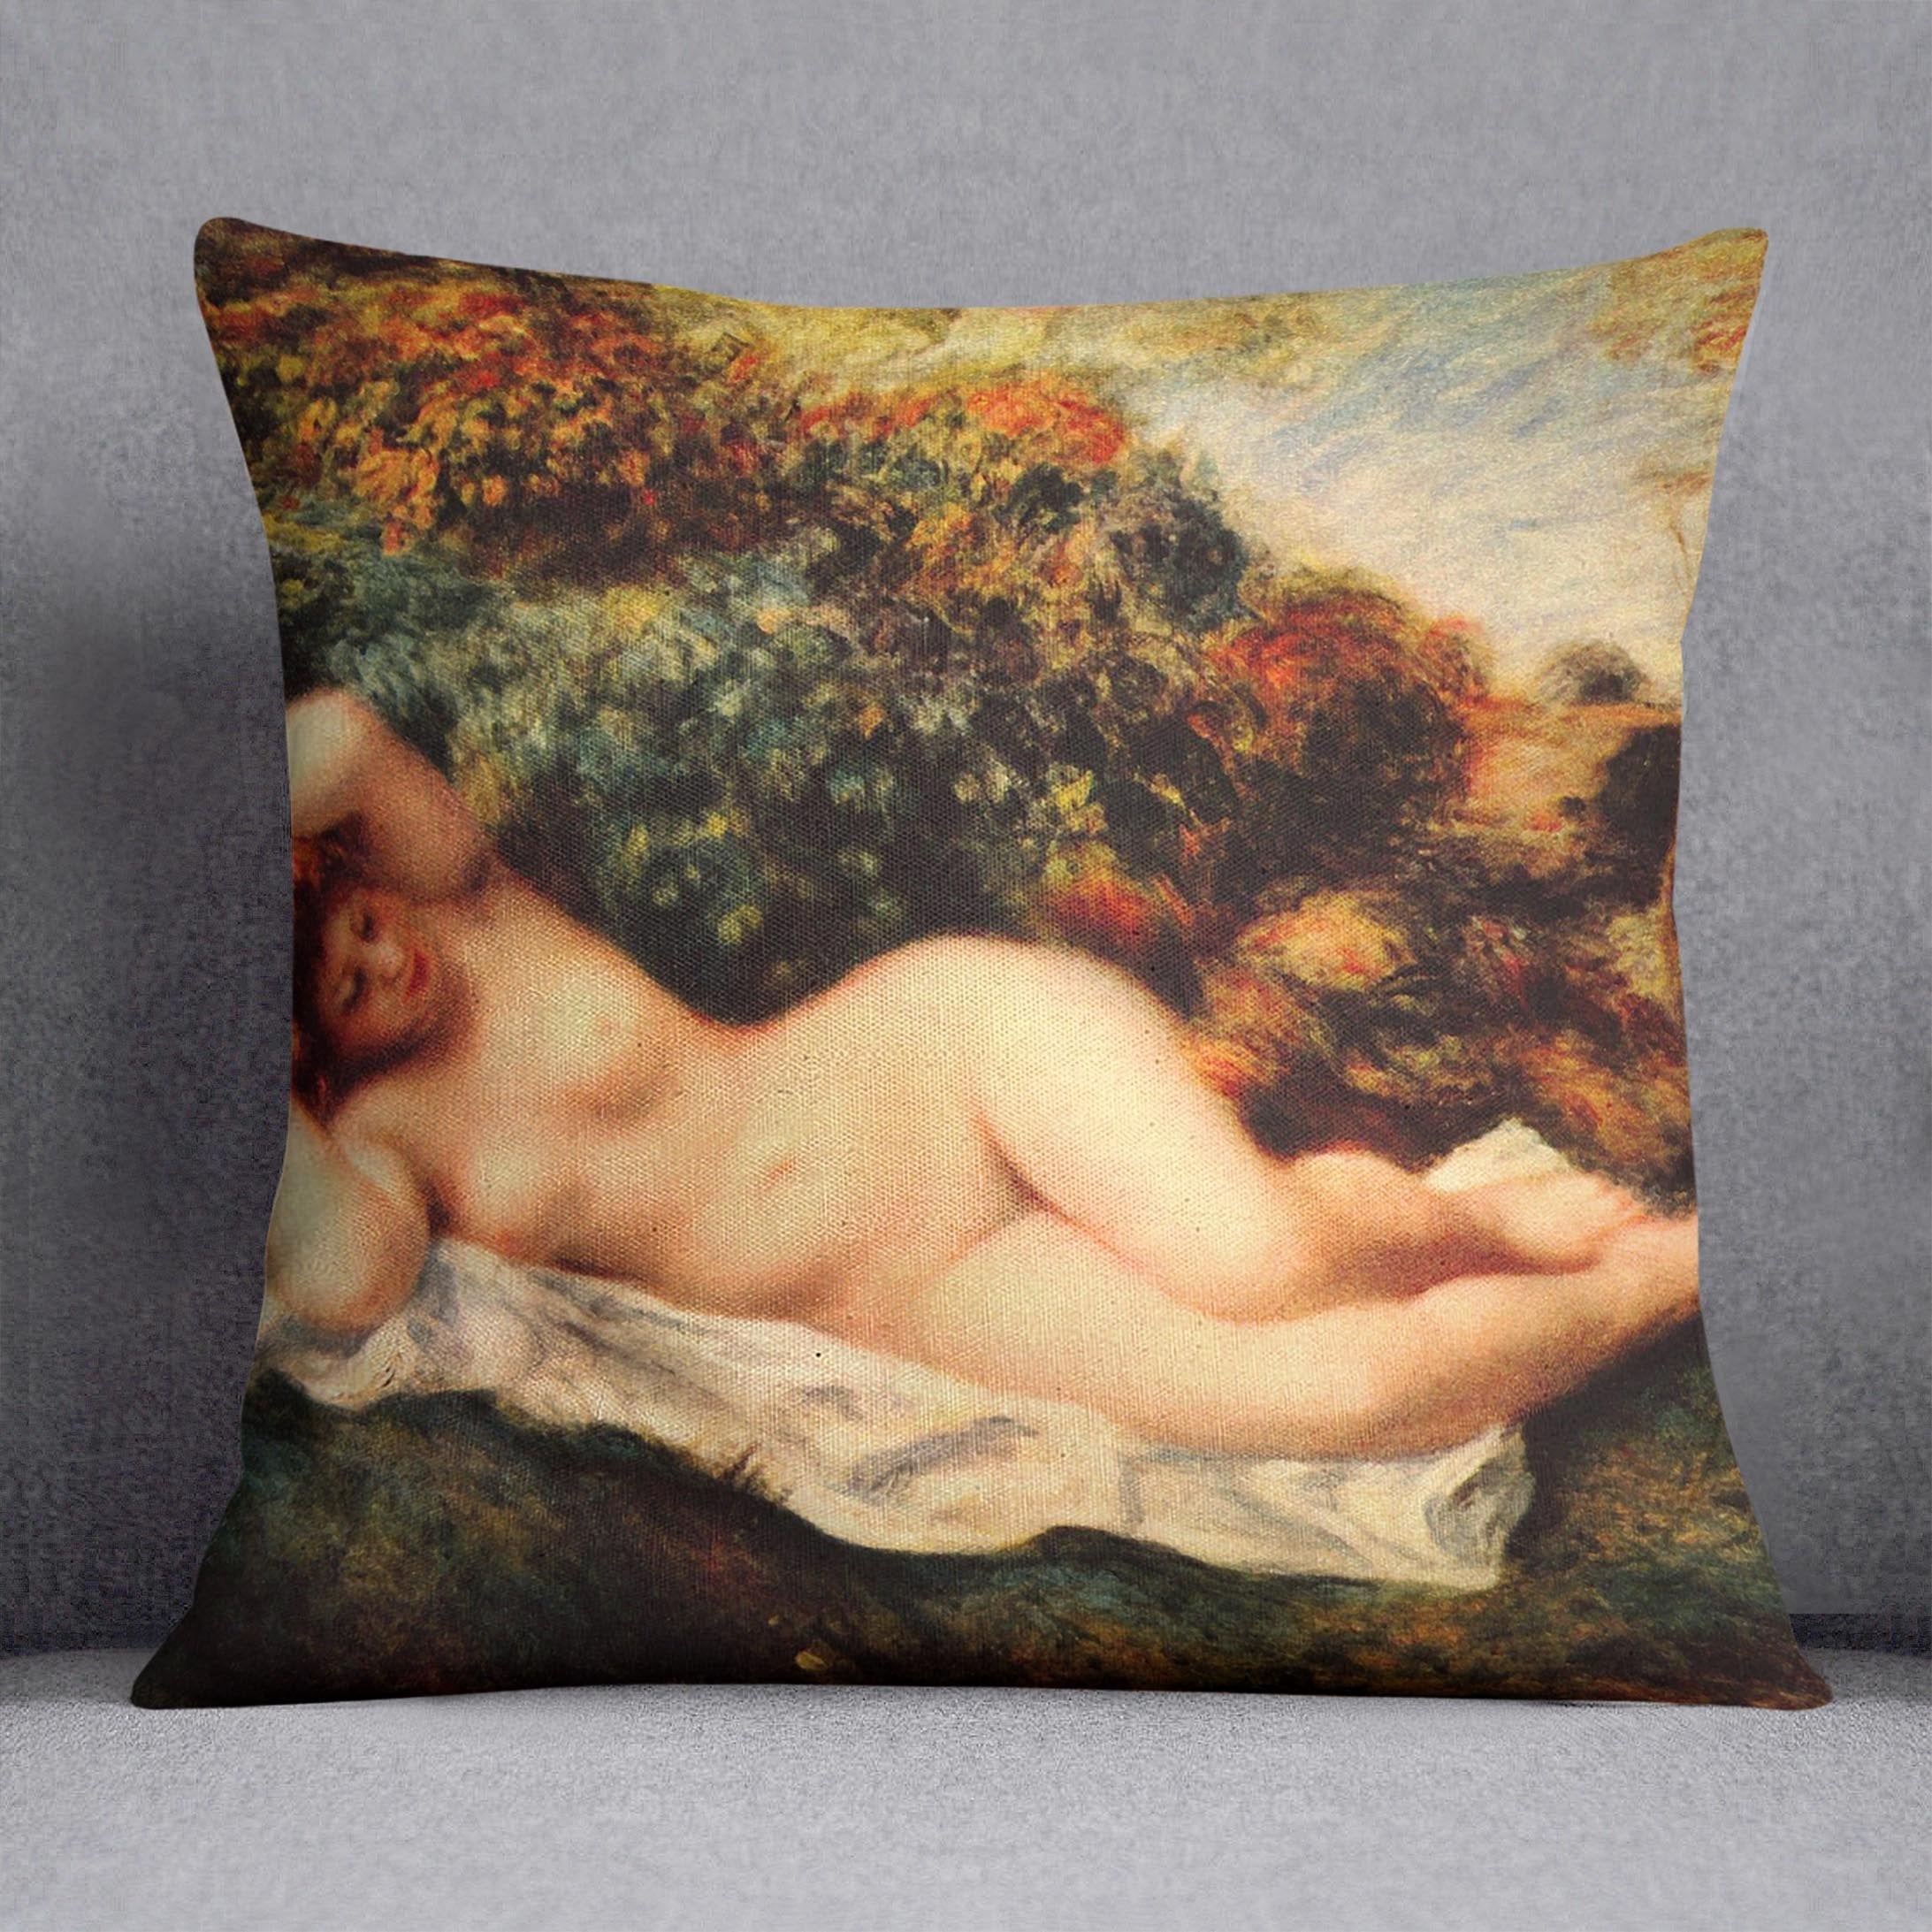 Bathing sleeping the baker by Renoir Throw Pillow